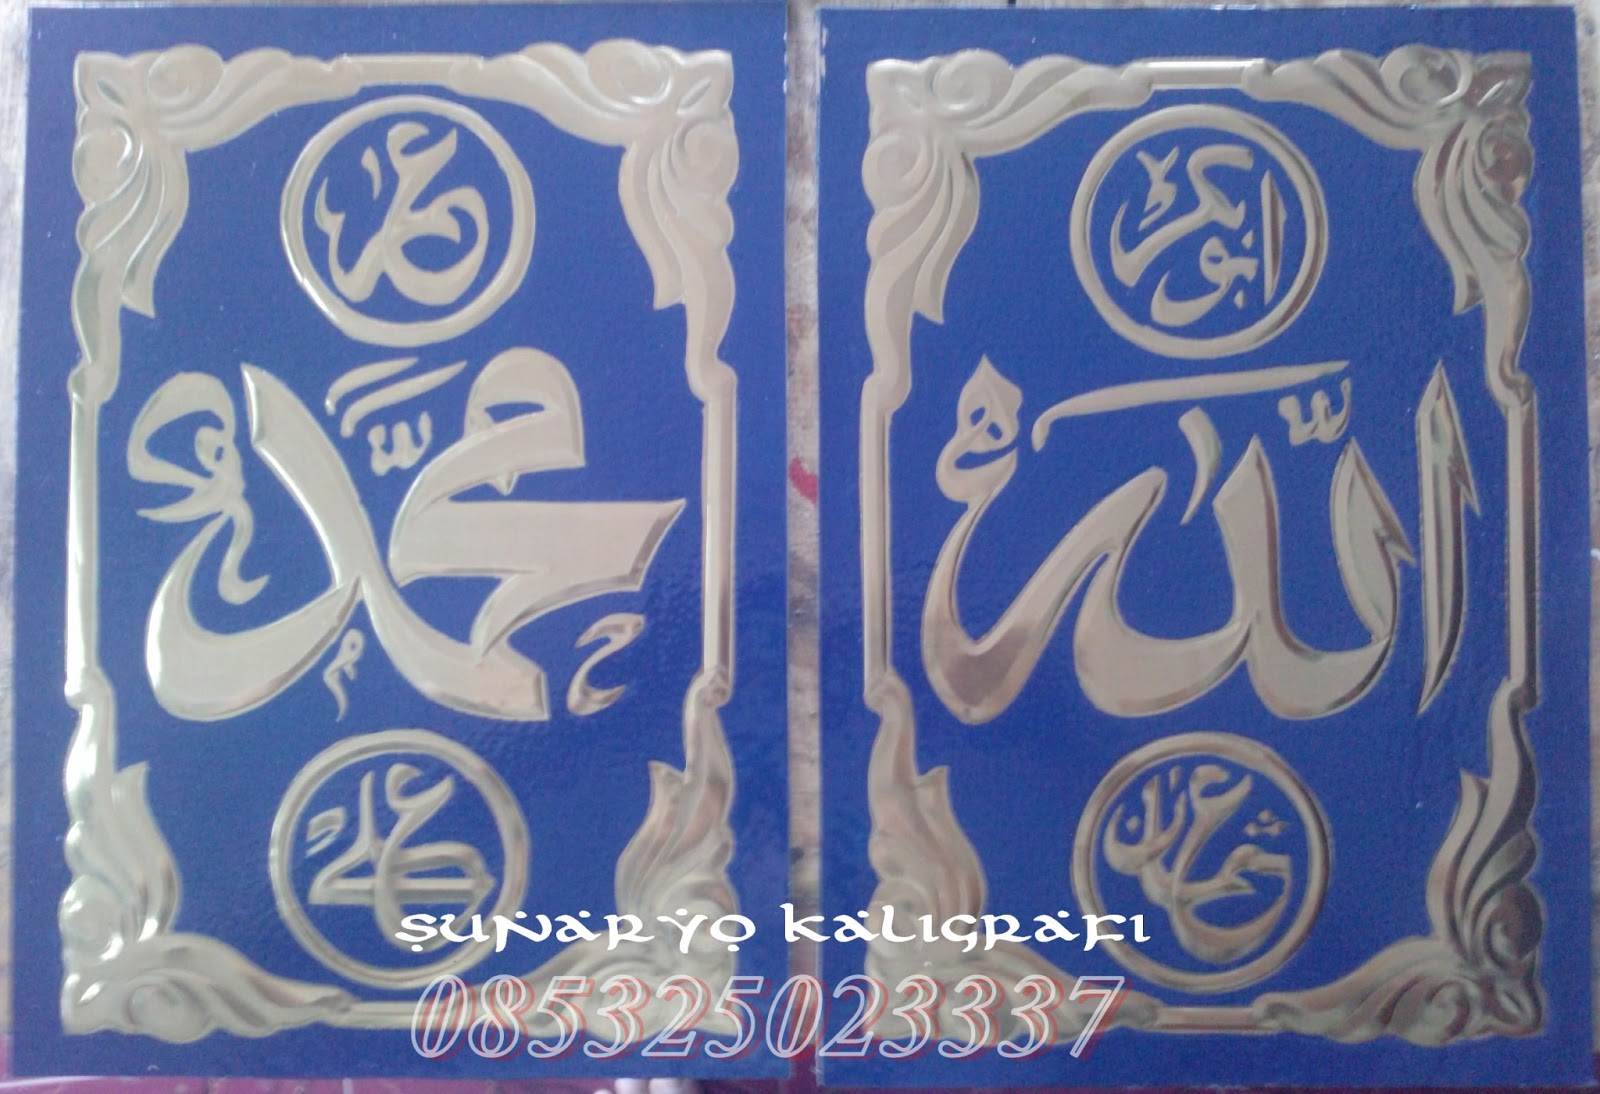  kaligrafi  ALLAH  MUHAMMAD am 